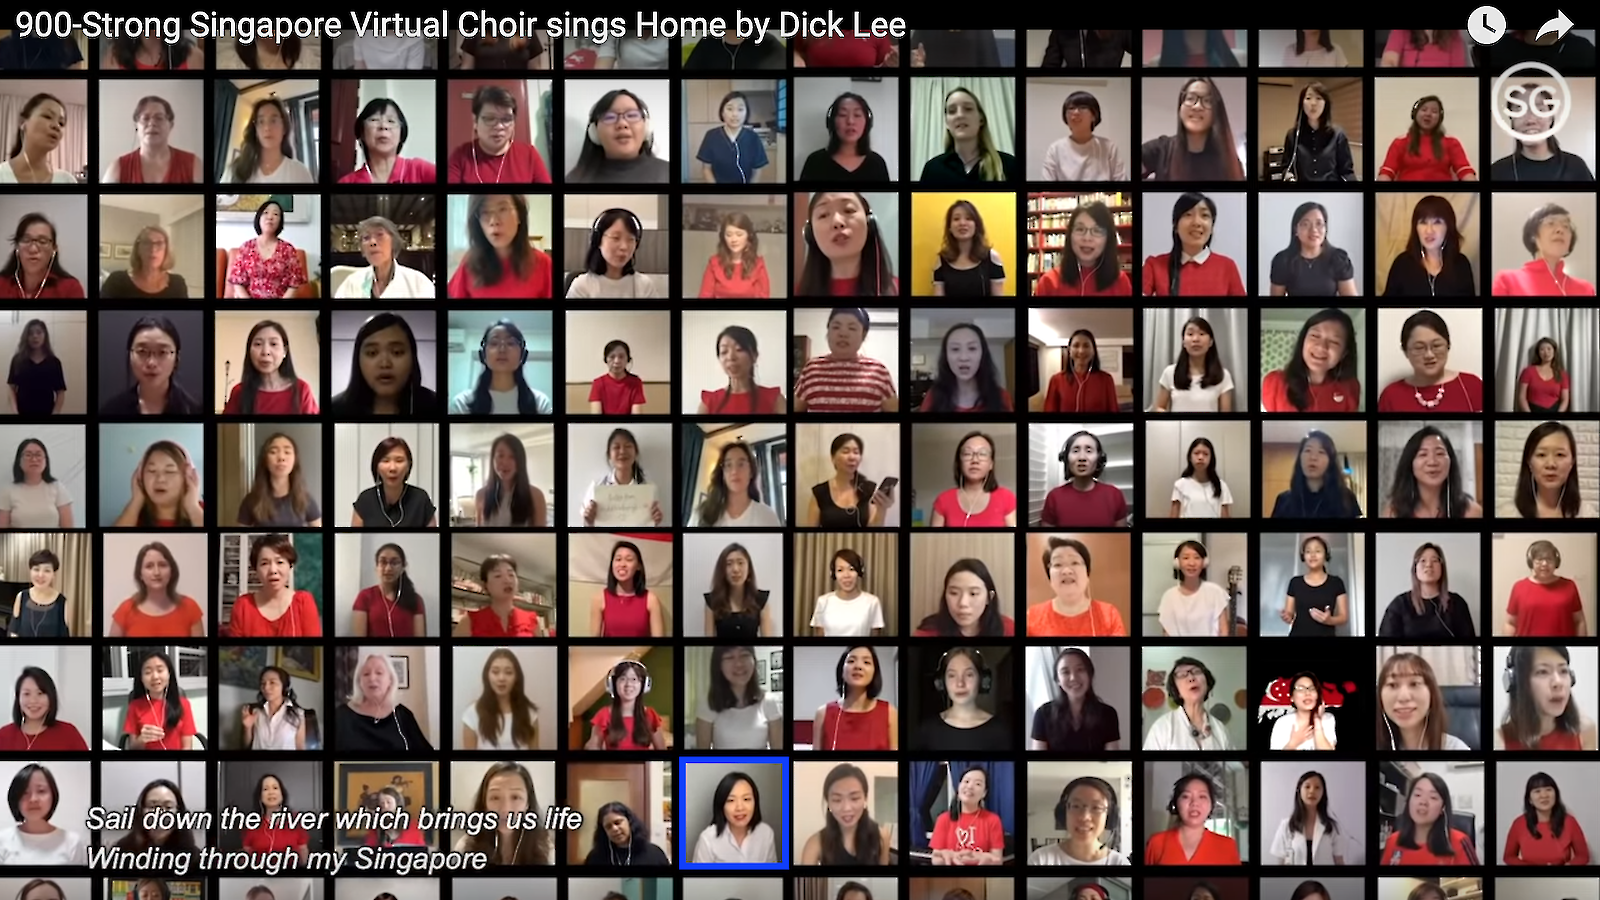 Featured Singapore Singapore Virtual Choir Community sings Home